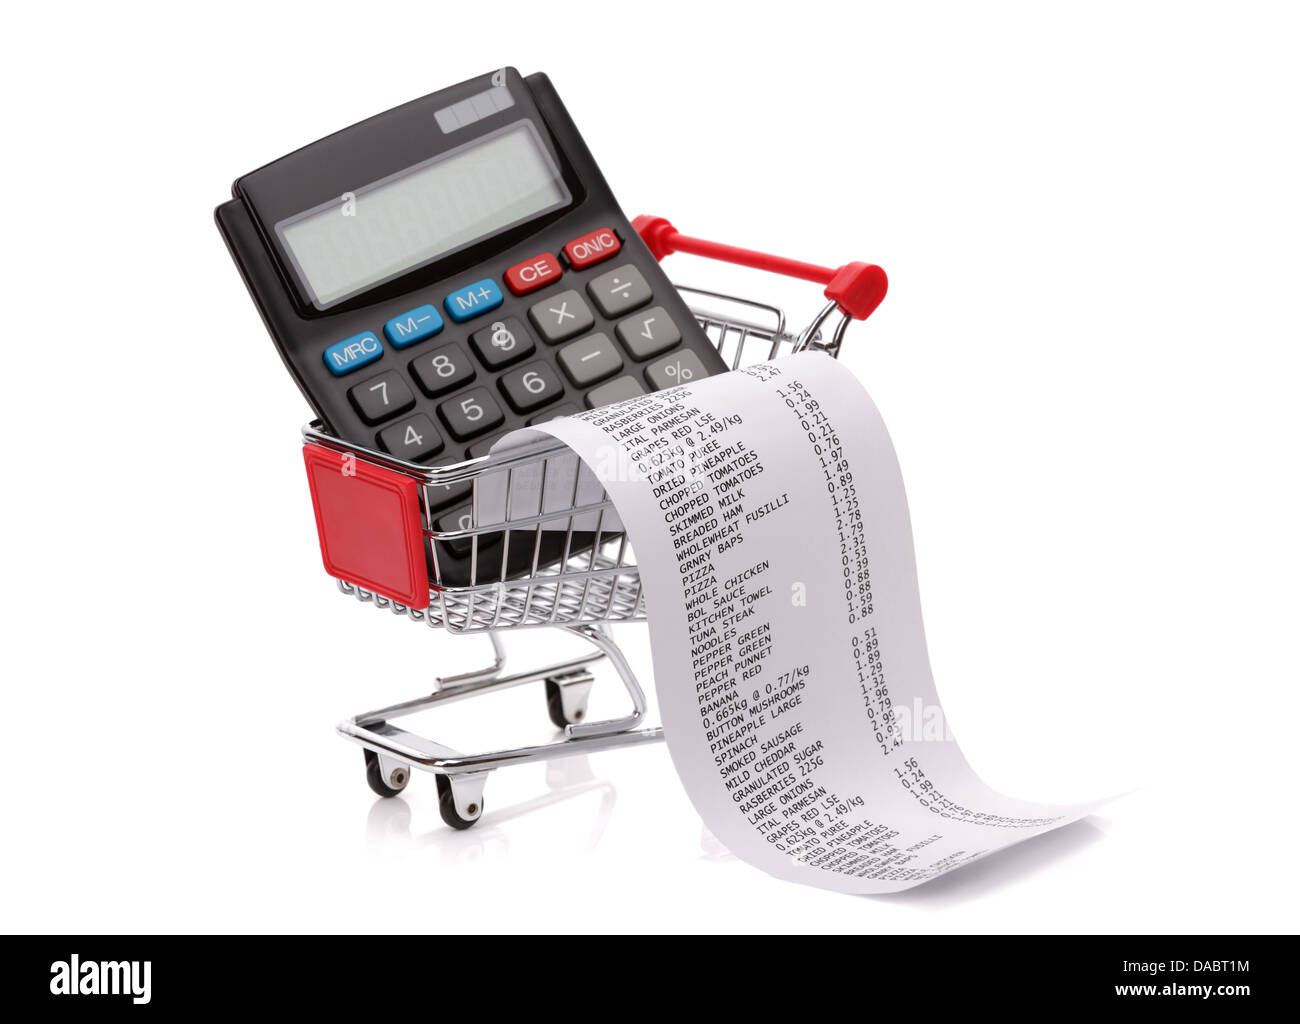 Shopping till receipt, calculator and cart Stock Photo